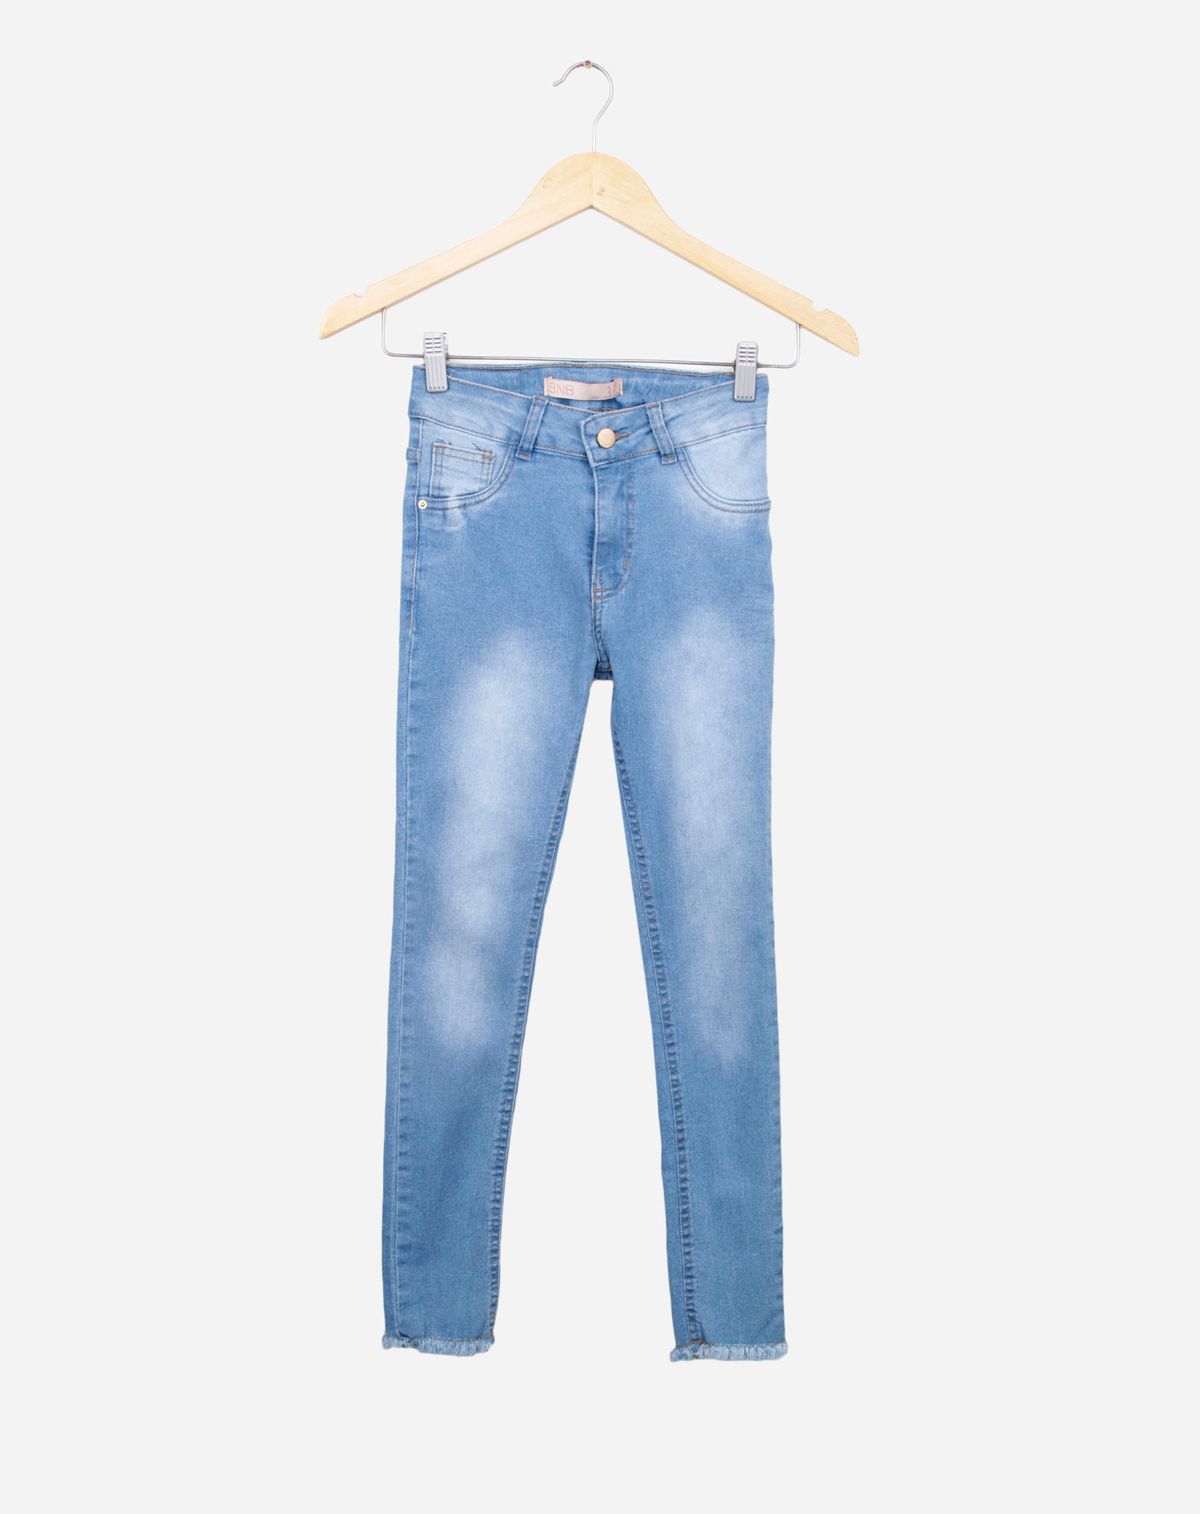 679462001-calca-jeans-juvenil-menino-skinny-lojas-besni-jeans-claro-10-549